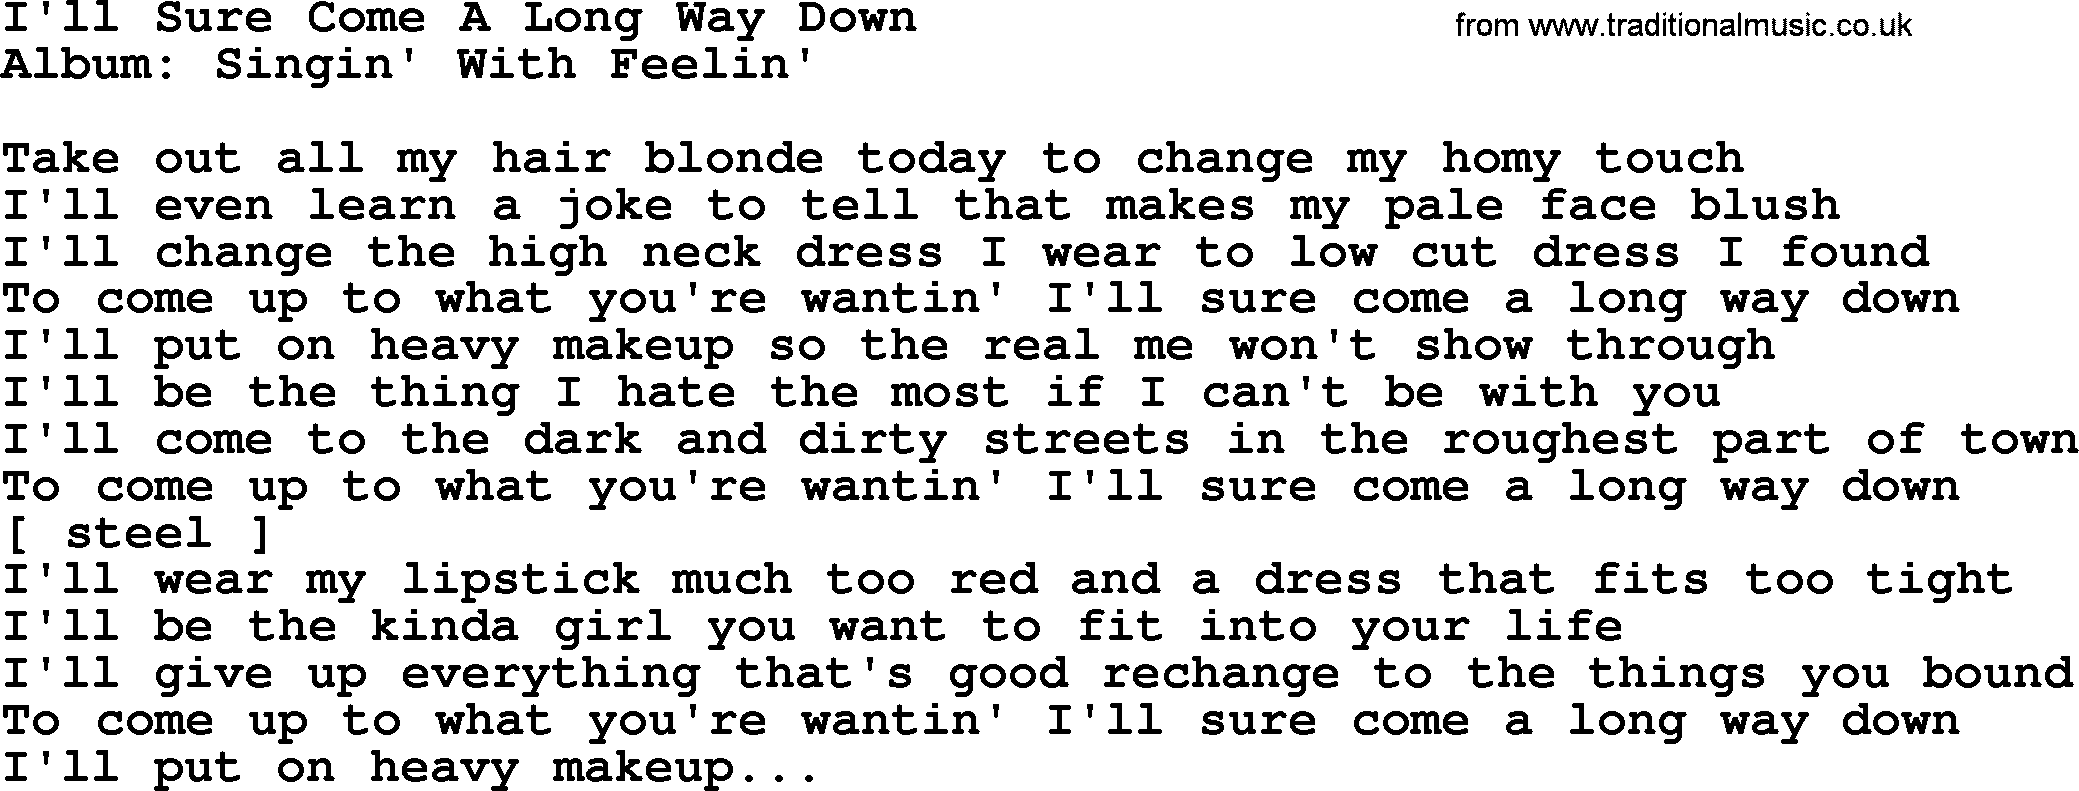 Loretta Lynn song: I'll Sure Come A Long Way Down lyrics